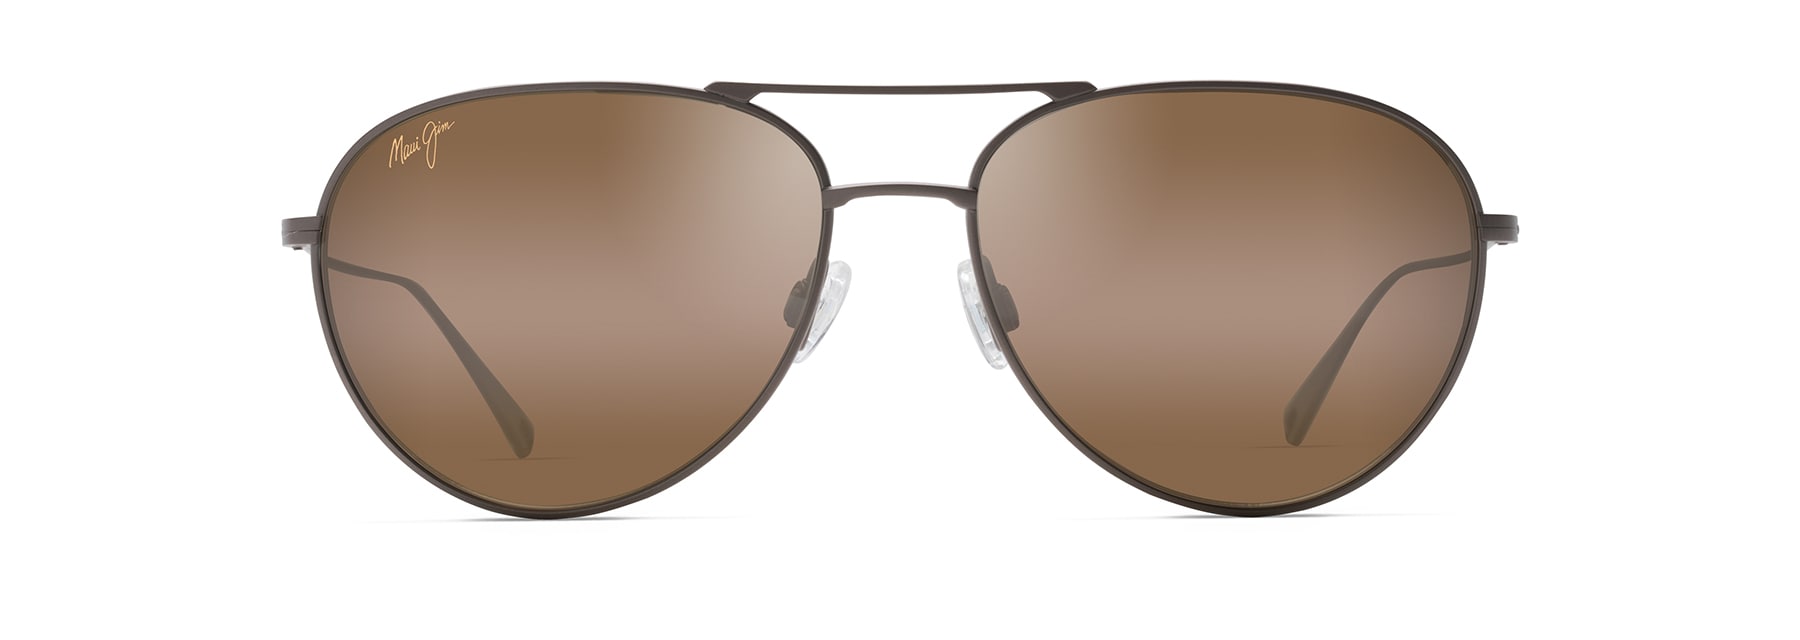 WALAKA Aviators Sunglasses